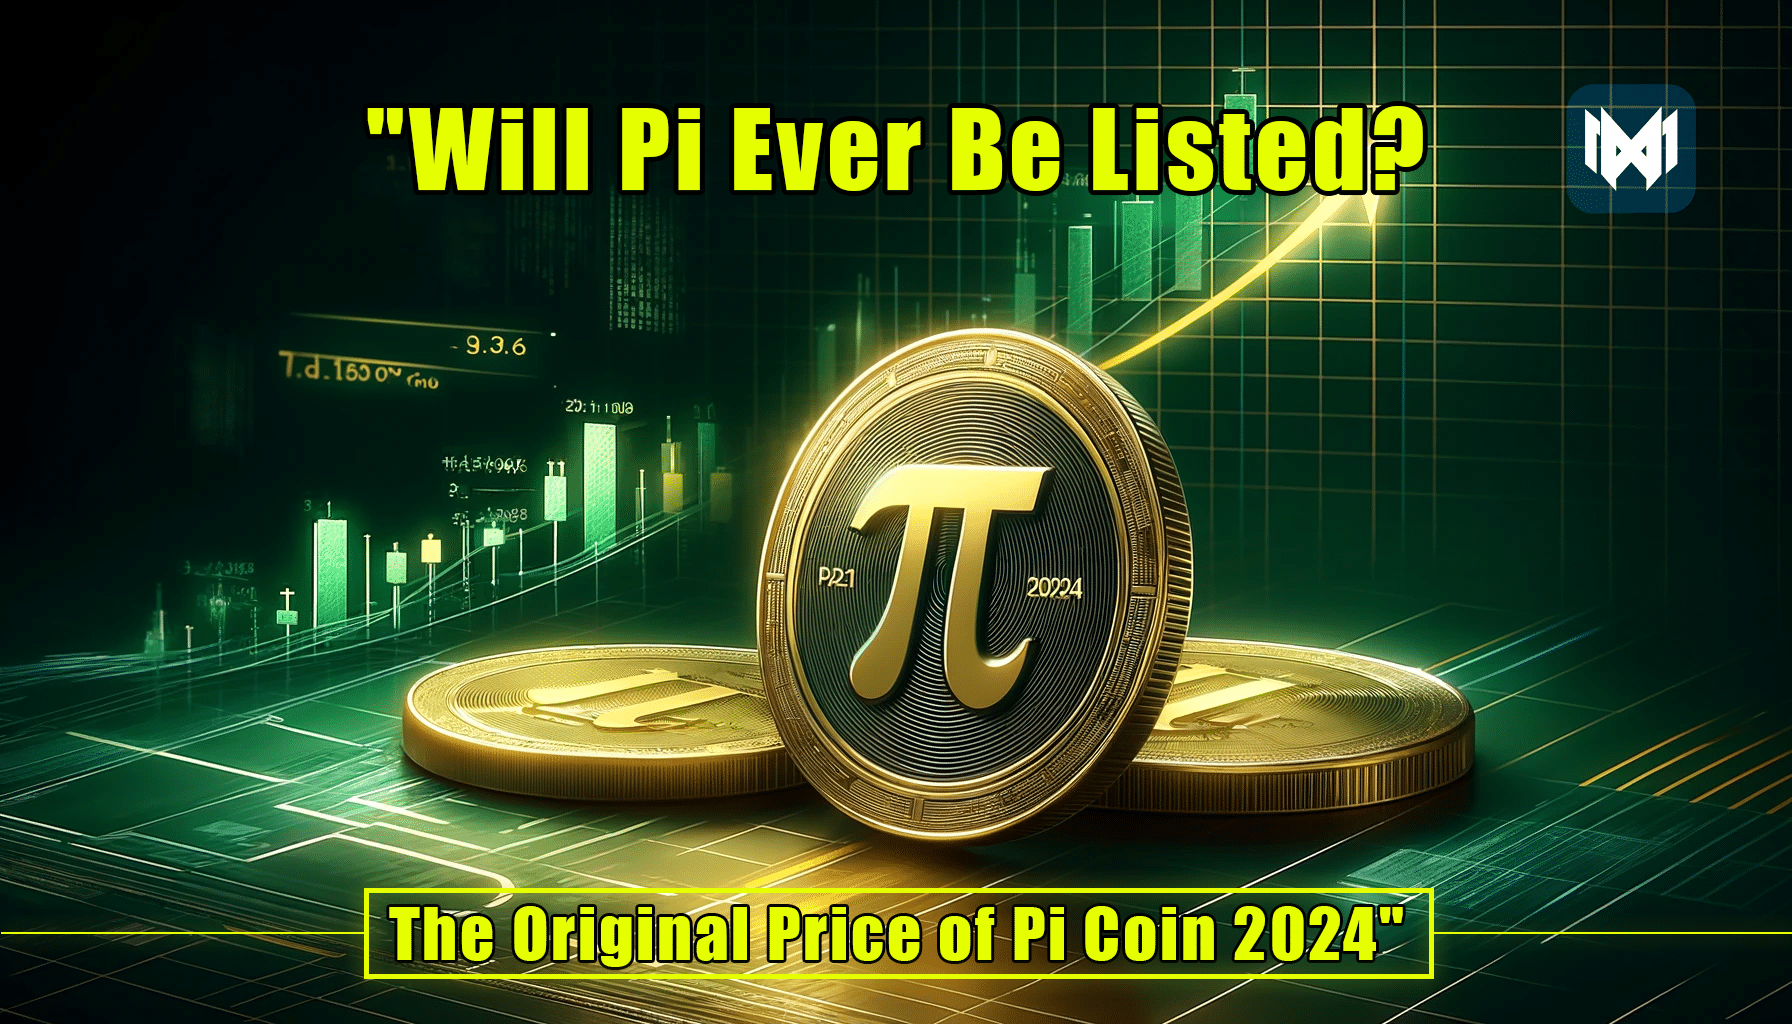 The Original Price of Pi Coin 2024